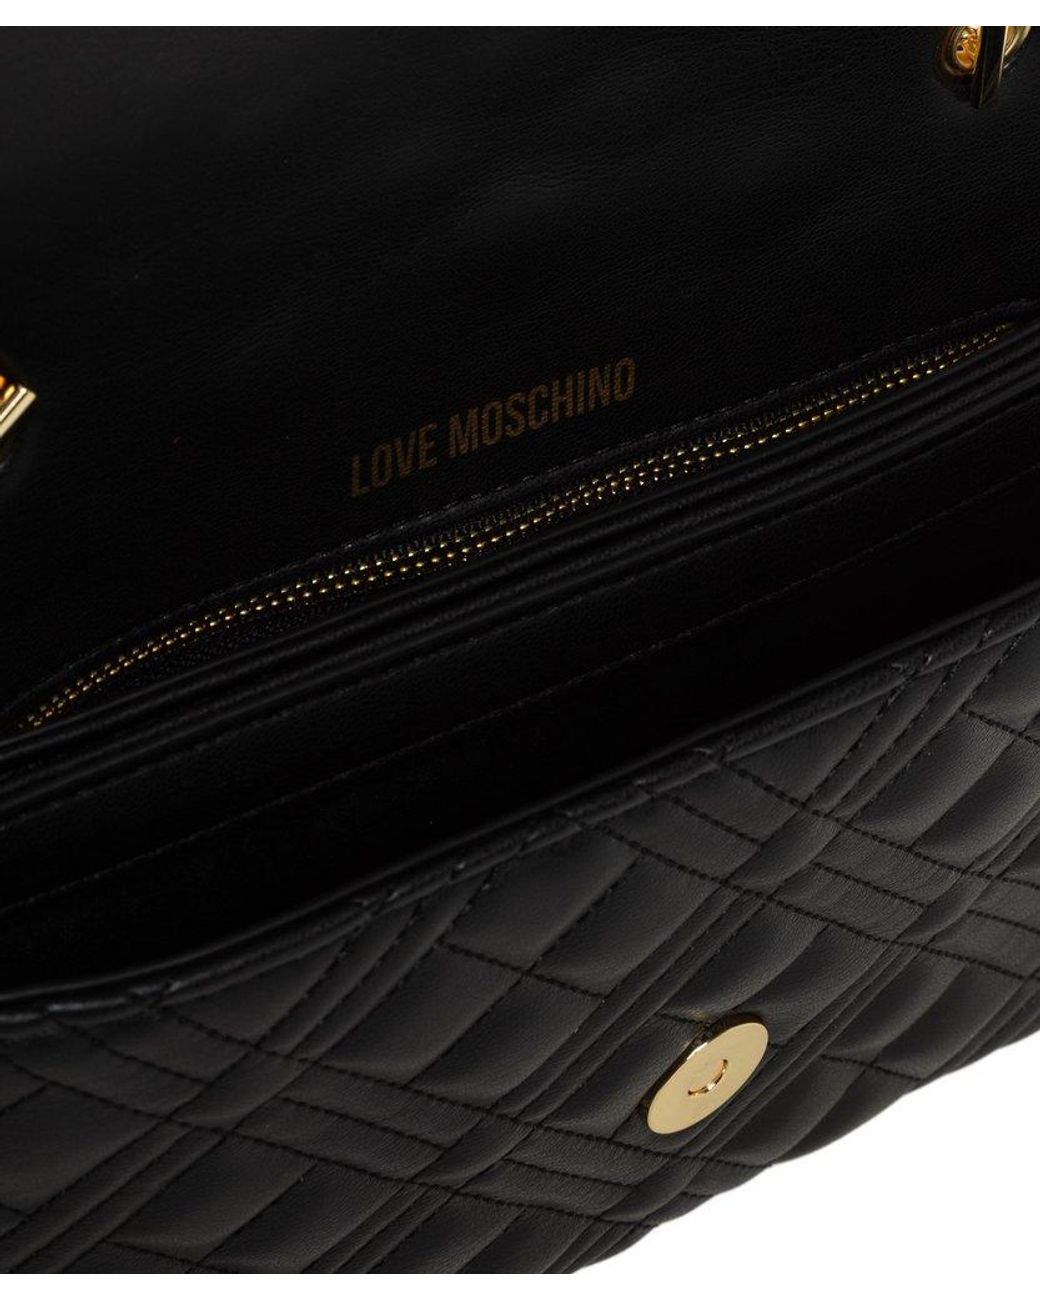 Love Moschino Crossbody Bag in Nero (Black) - Save 43% | Lyst